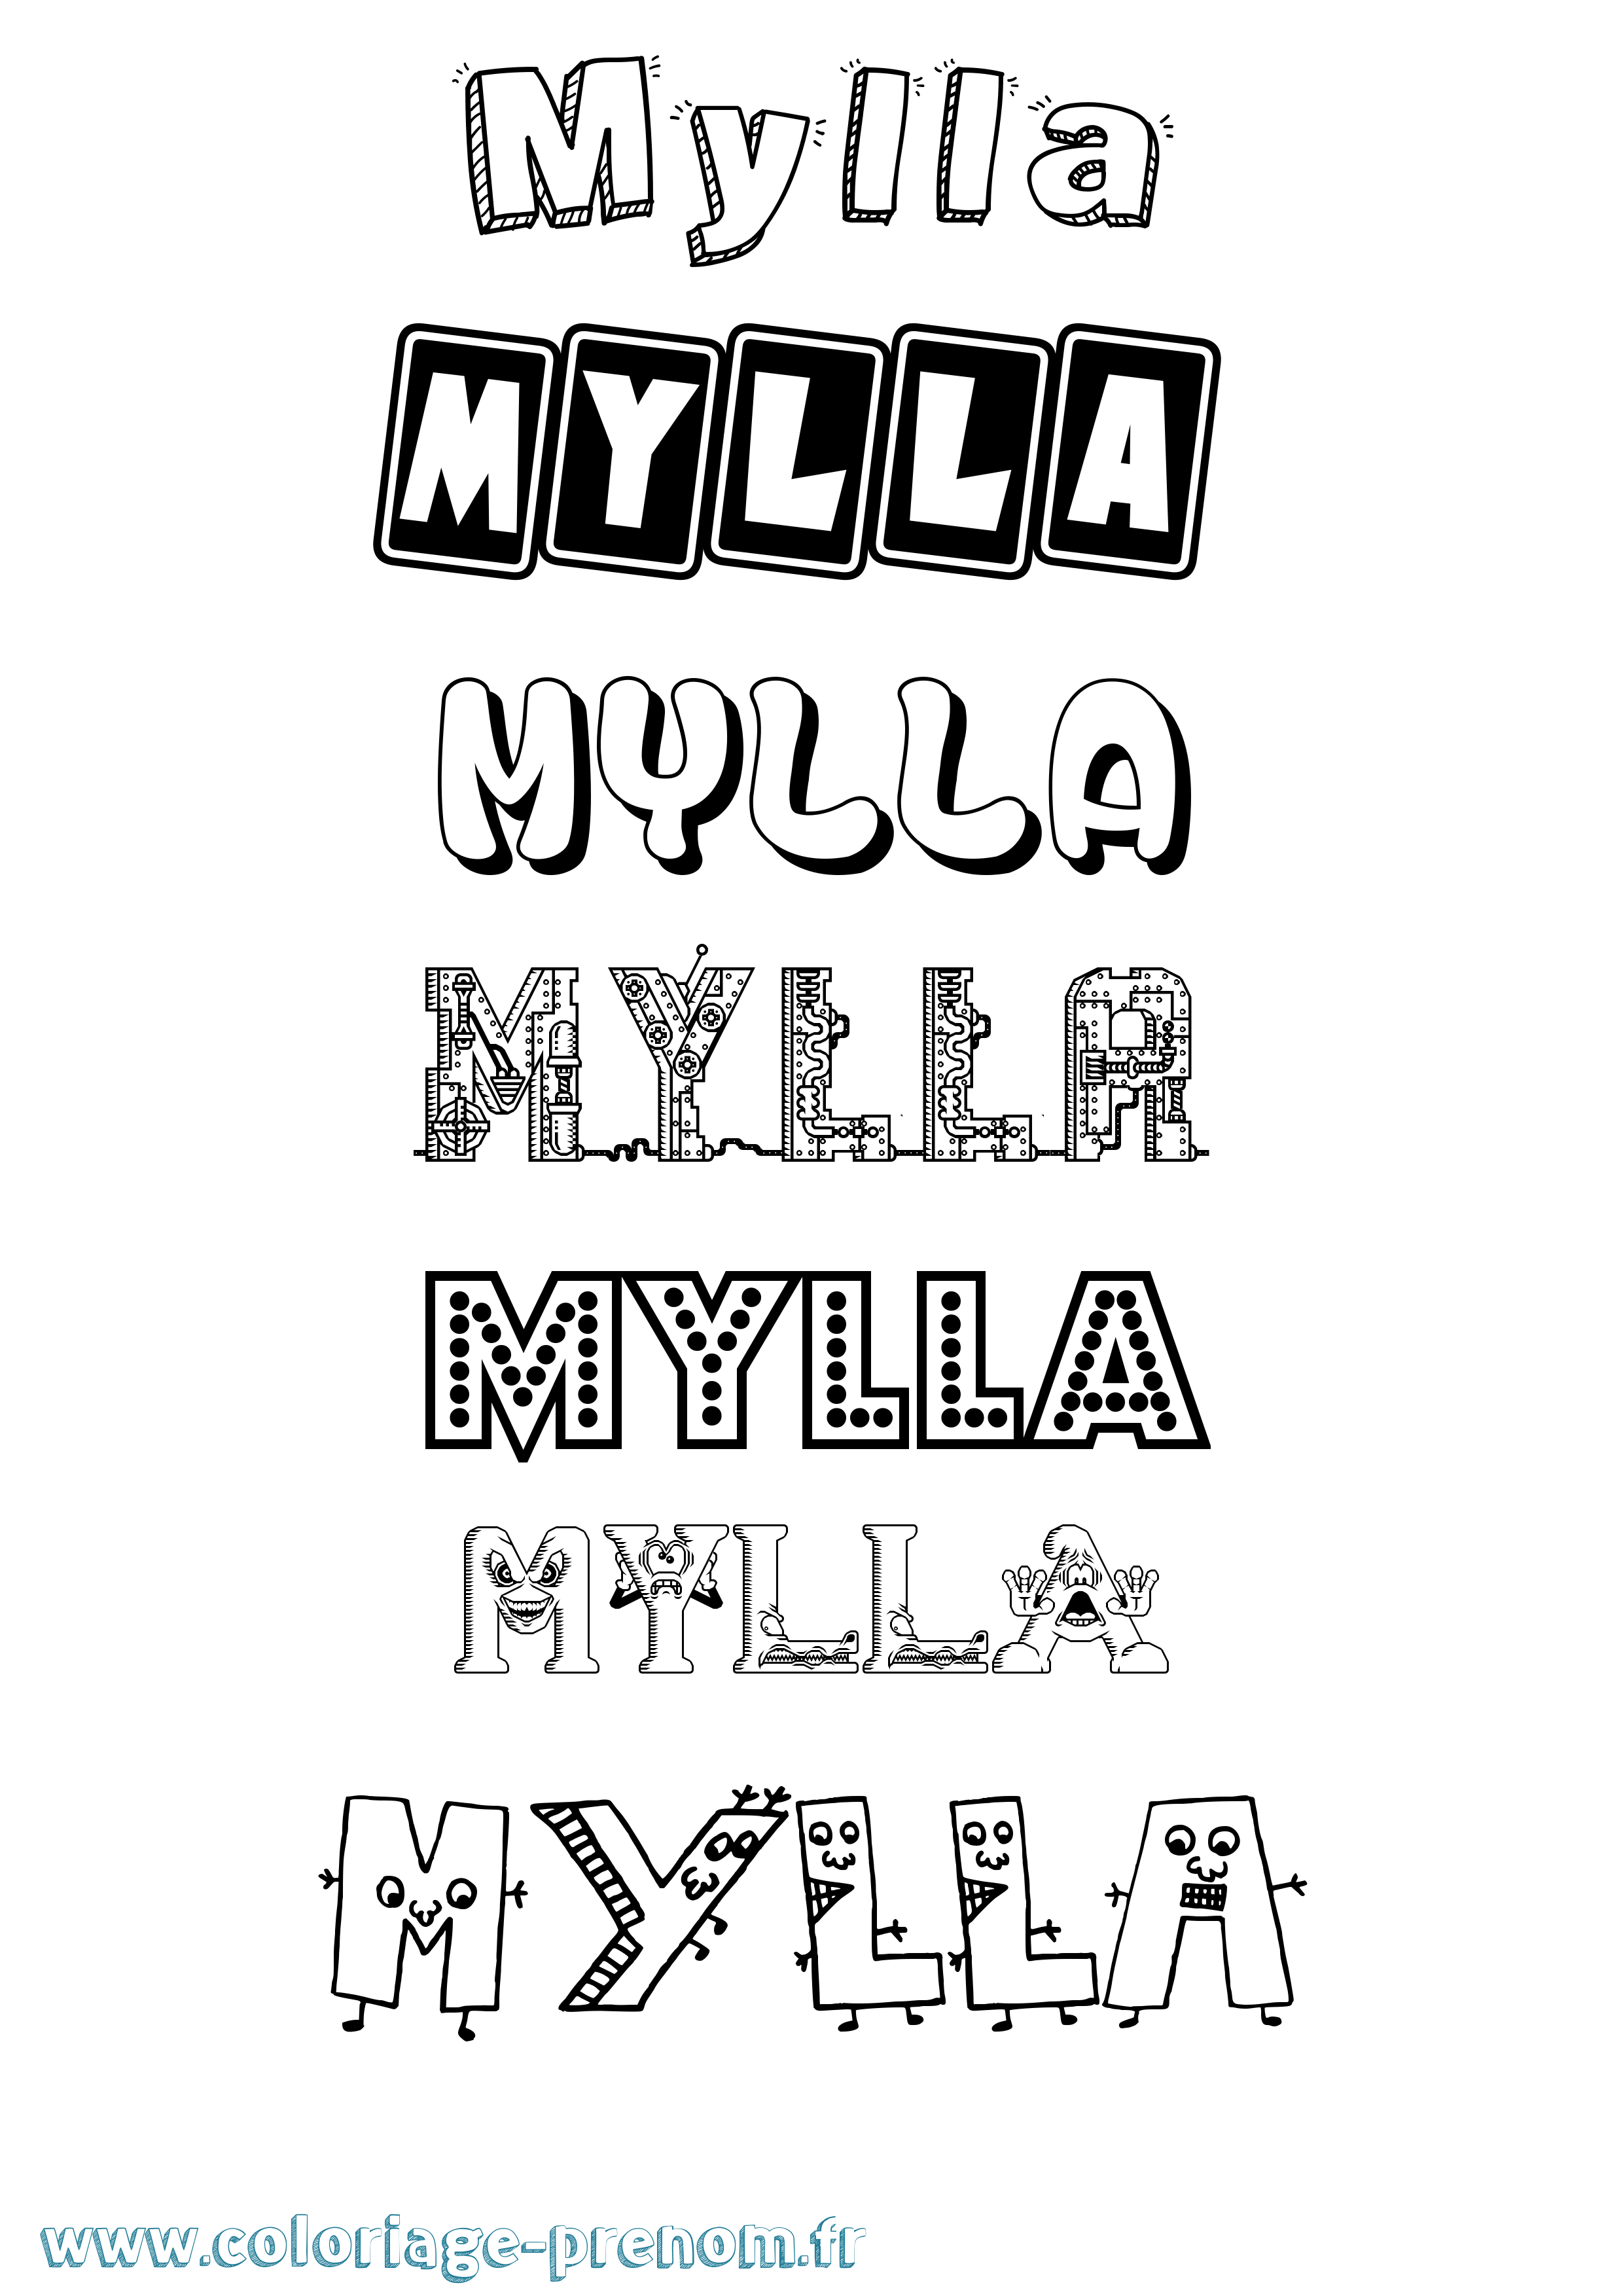 Coloriage prénom Mylla Fun